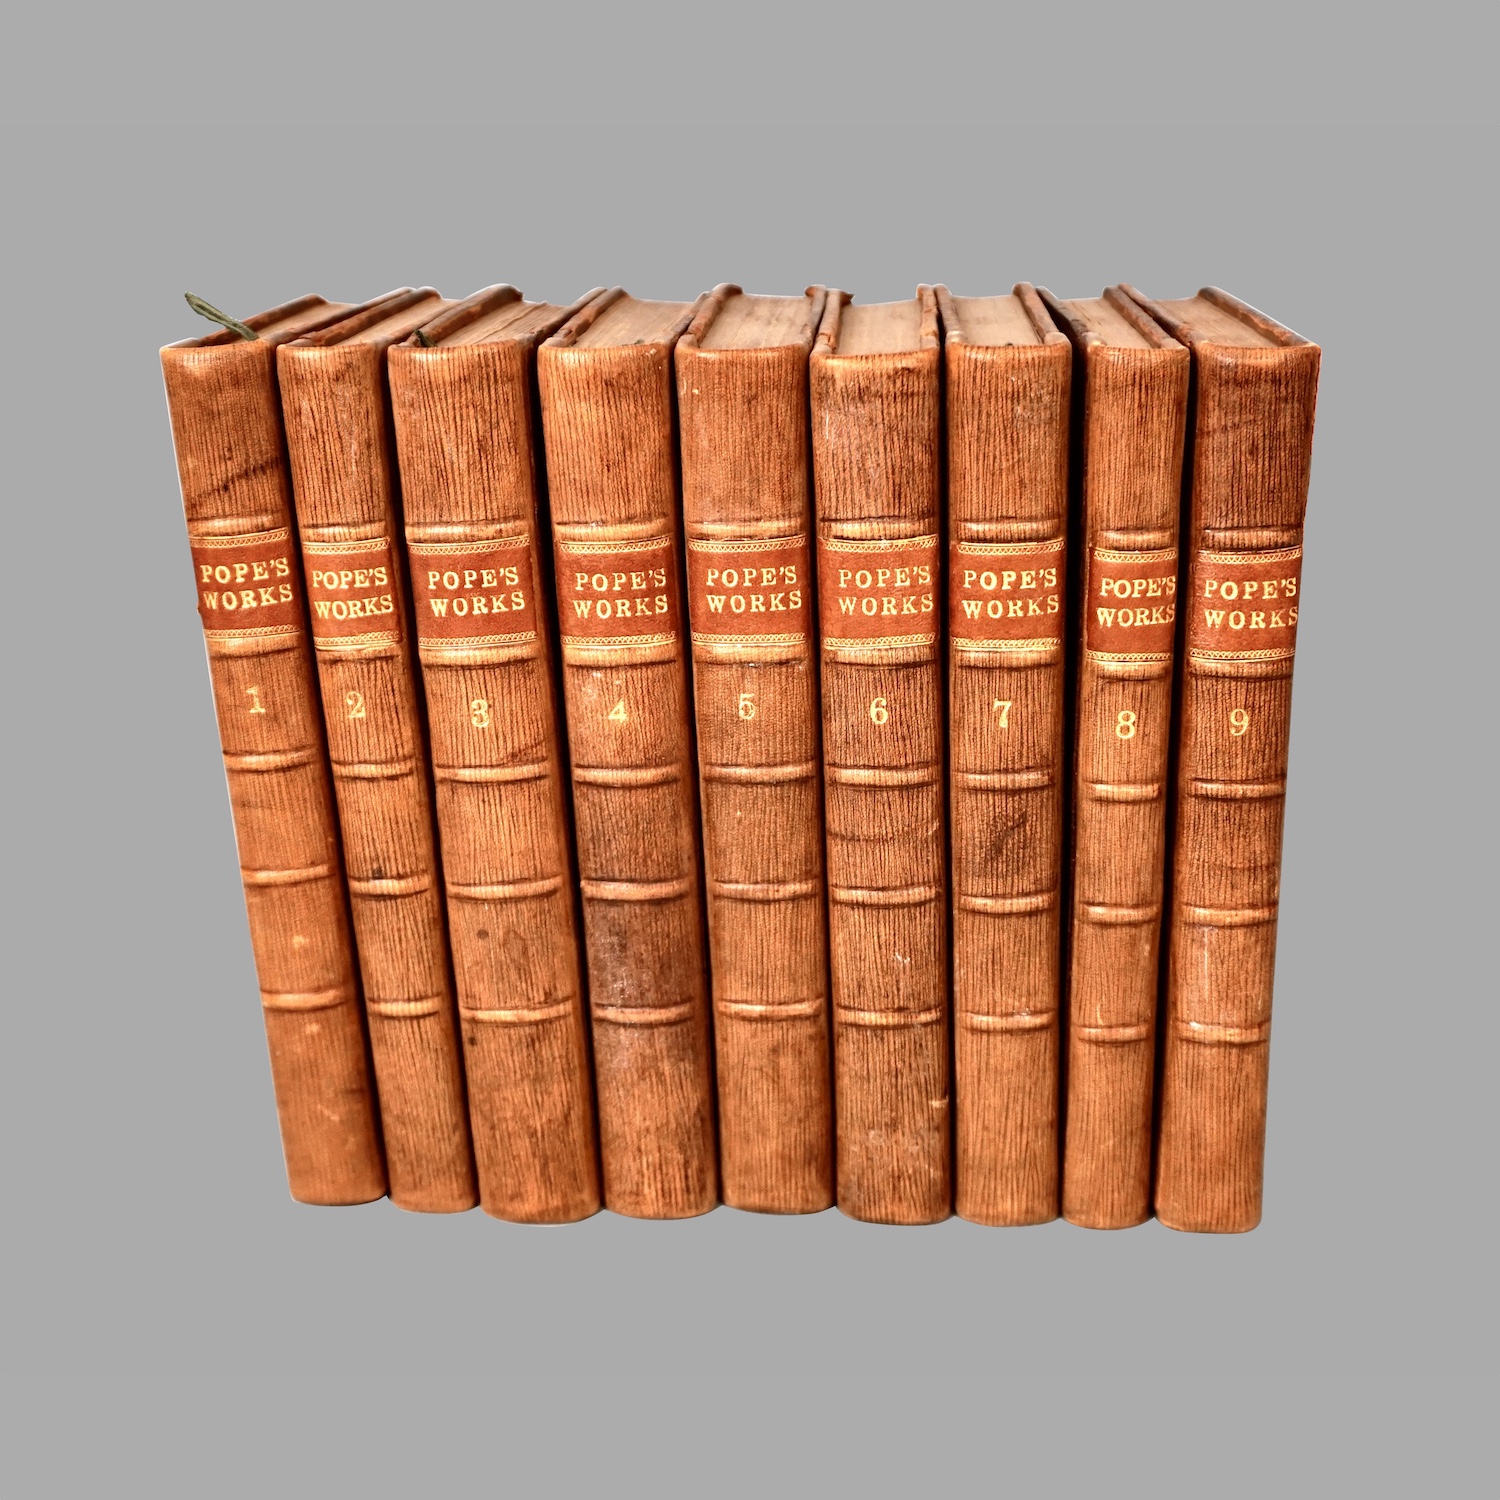 works-alexander-pope-leatherbound-9-volumes-published-1757-c921-5